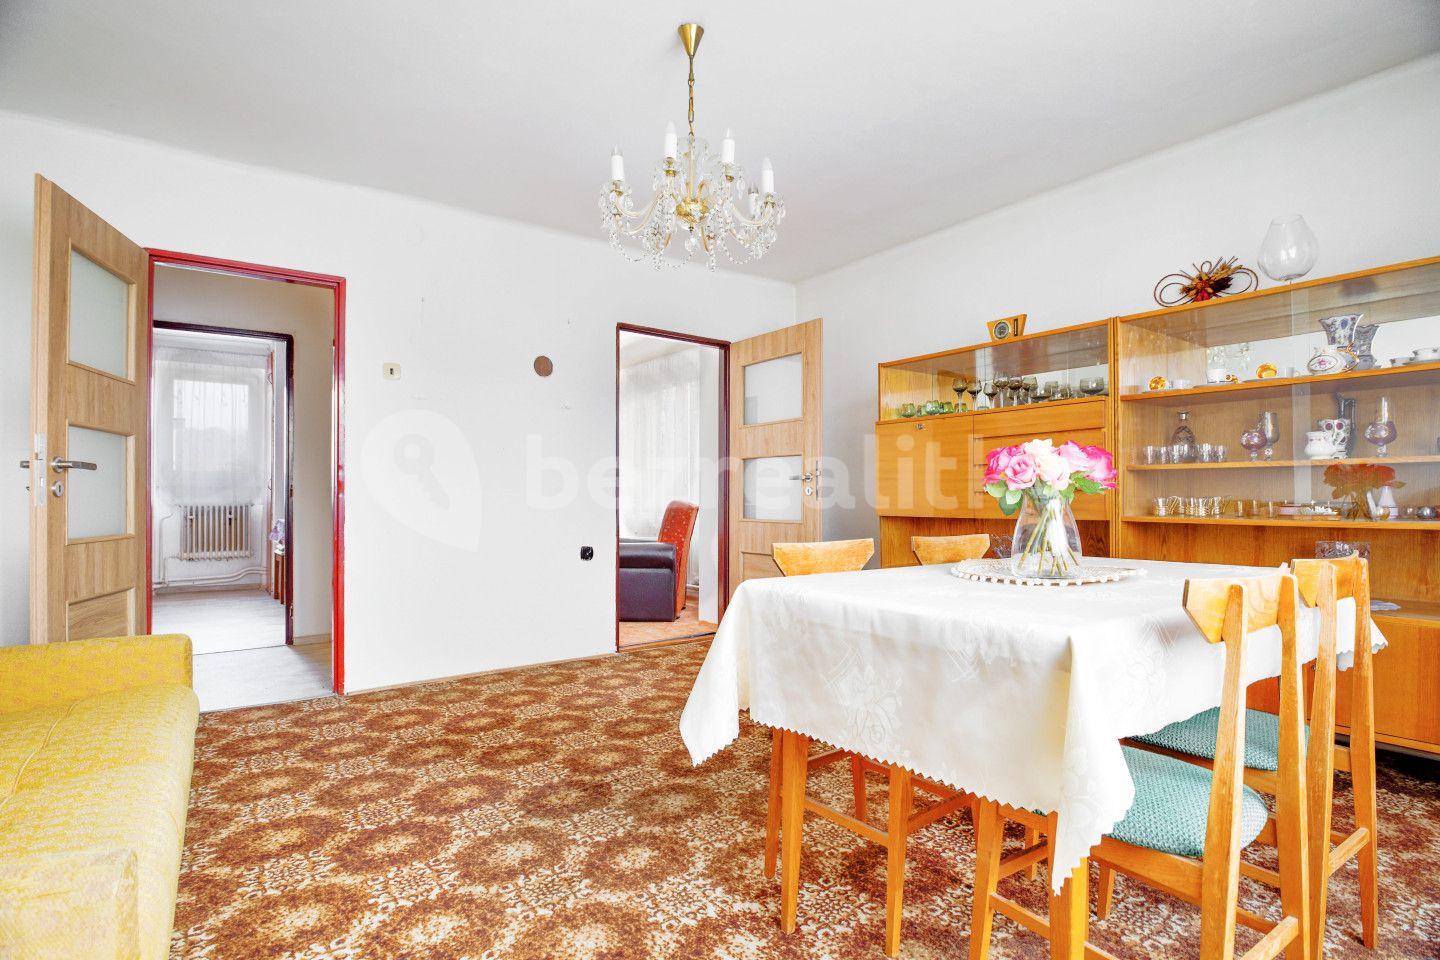 3 bedroom flat for sale, 68 m², Liběšice, Ústecký Region